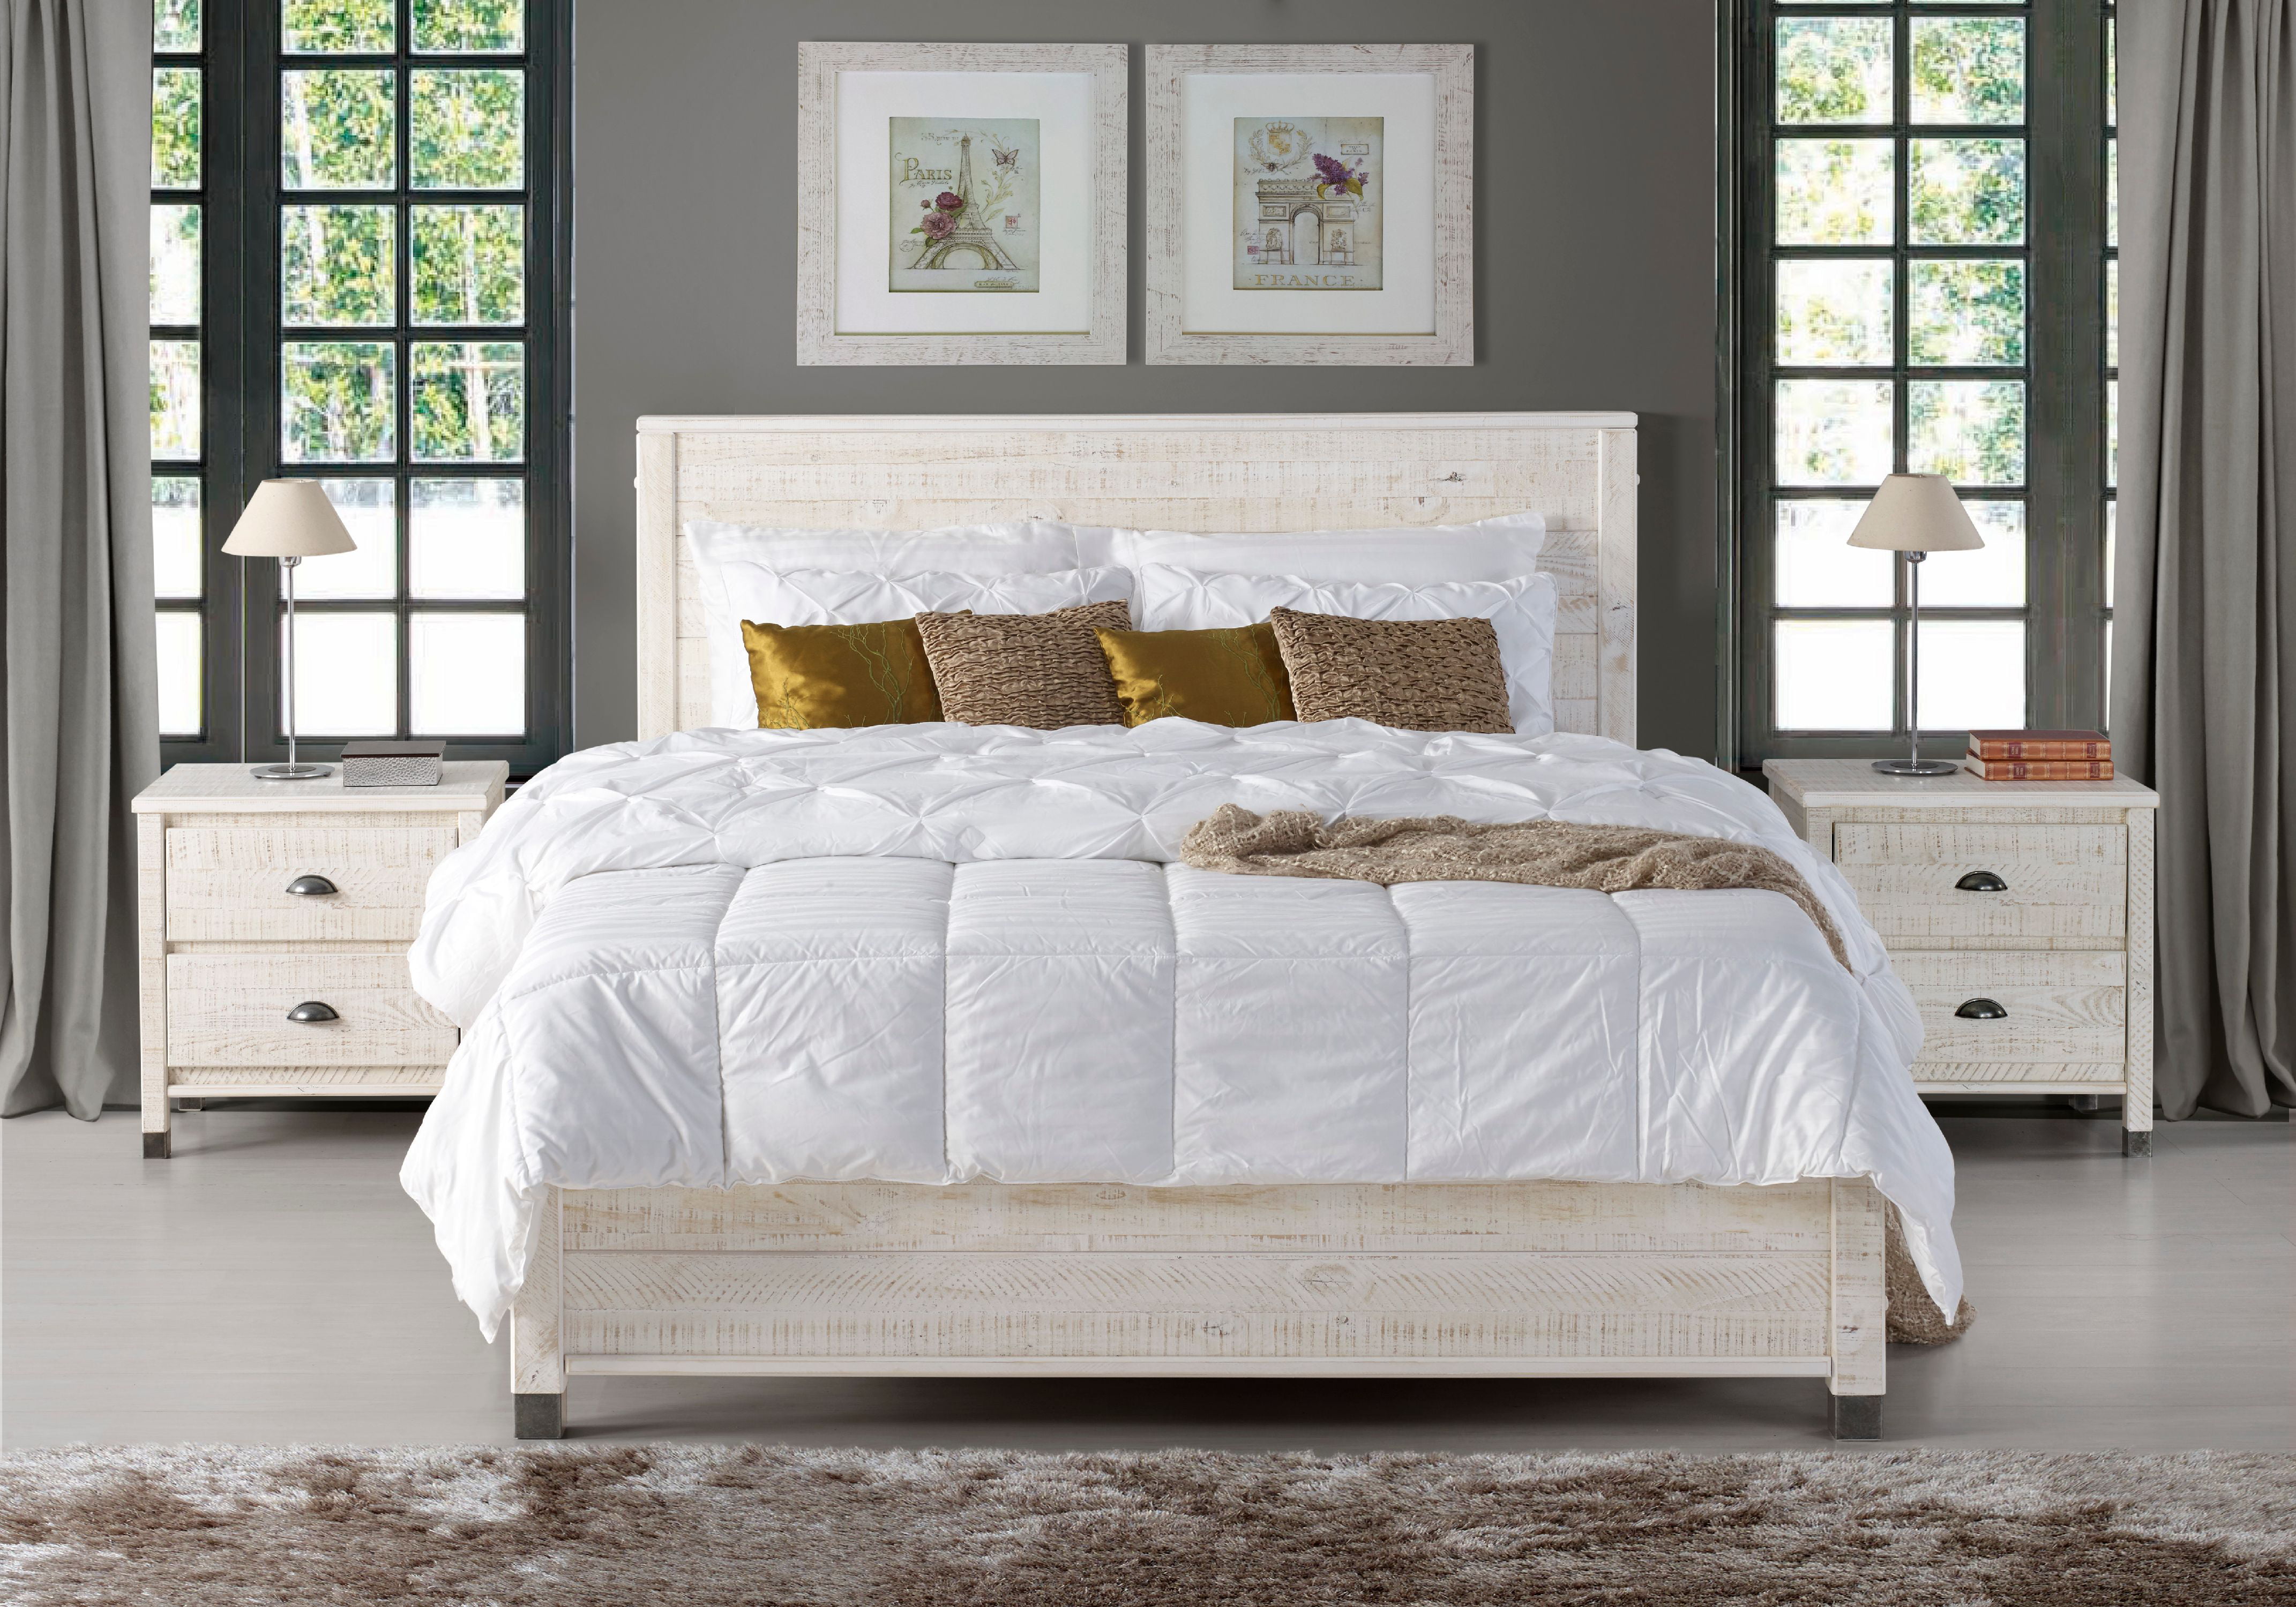 Baja Platform Bed - Full Size - Shabby White Finish - Walmart.com ...